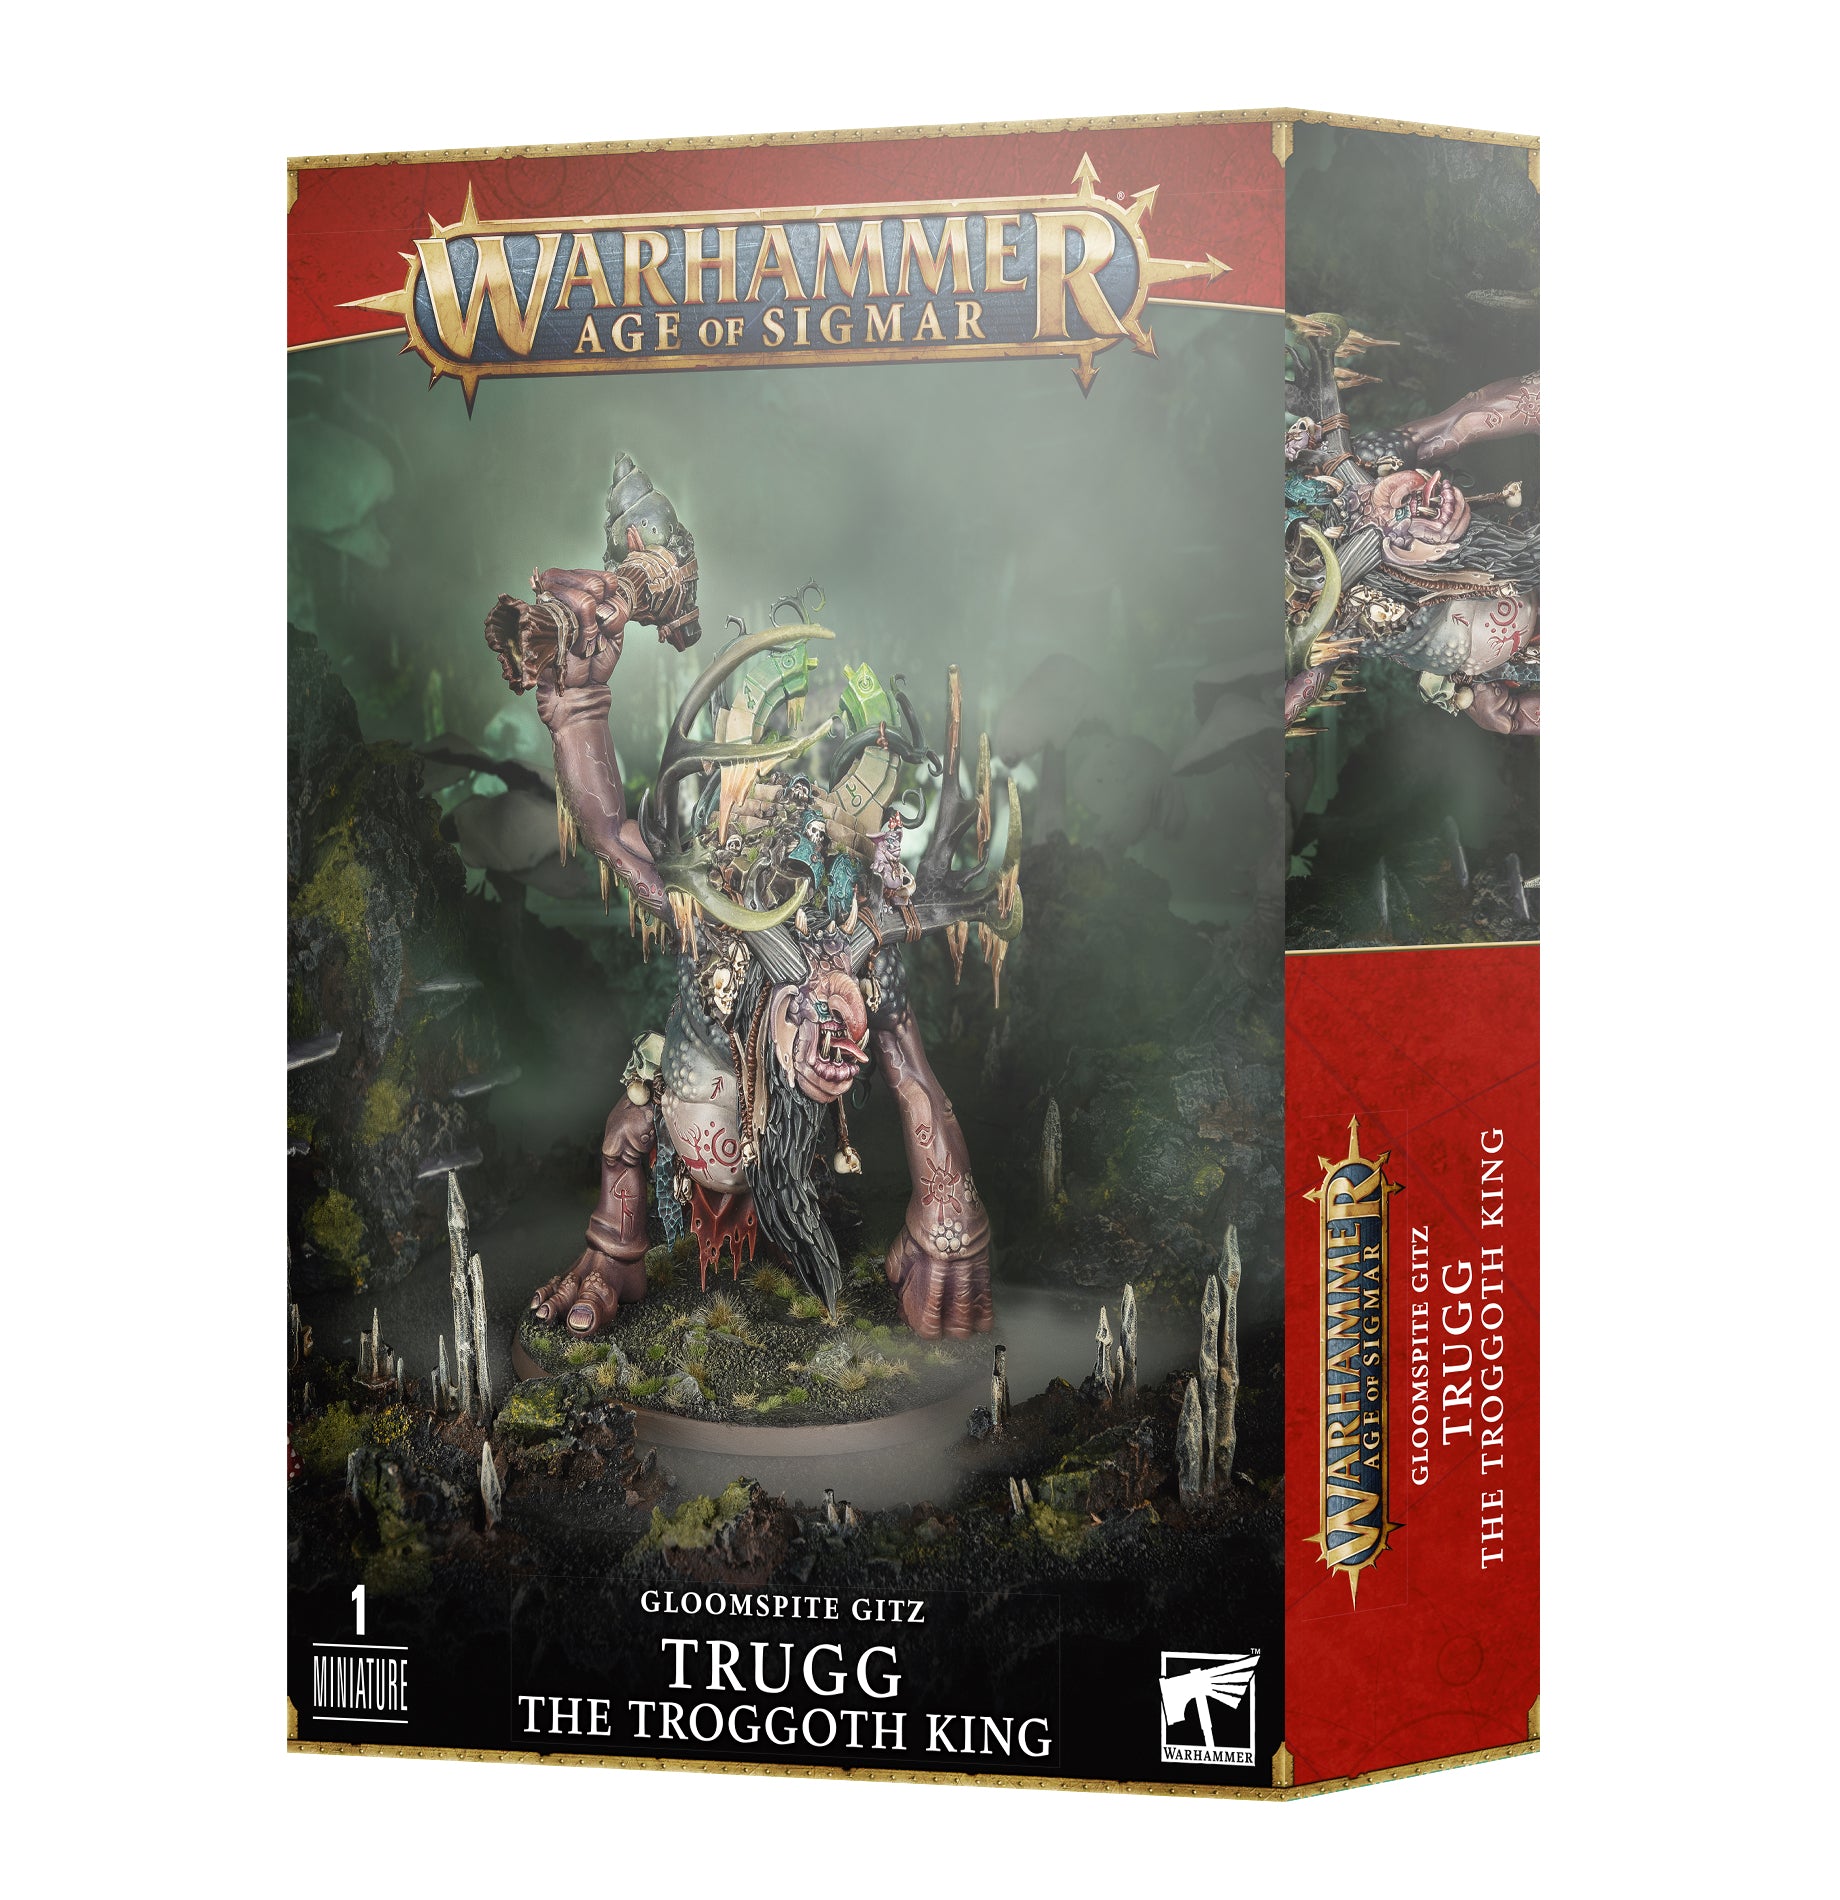 Warhammer Age of Sigmar: Gloomspite Gitz Trugg the Troggoth King